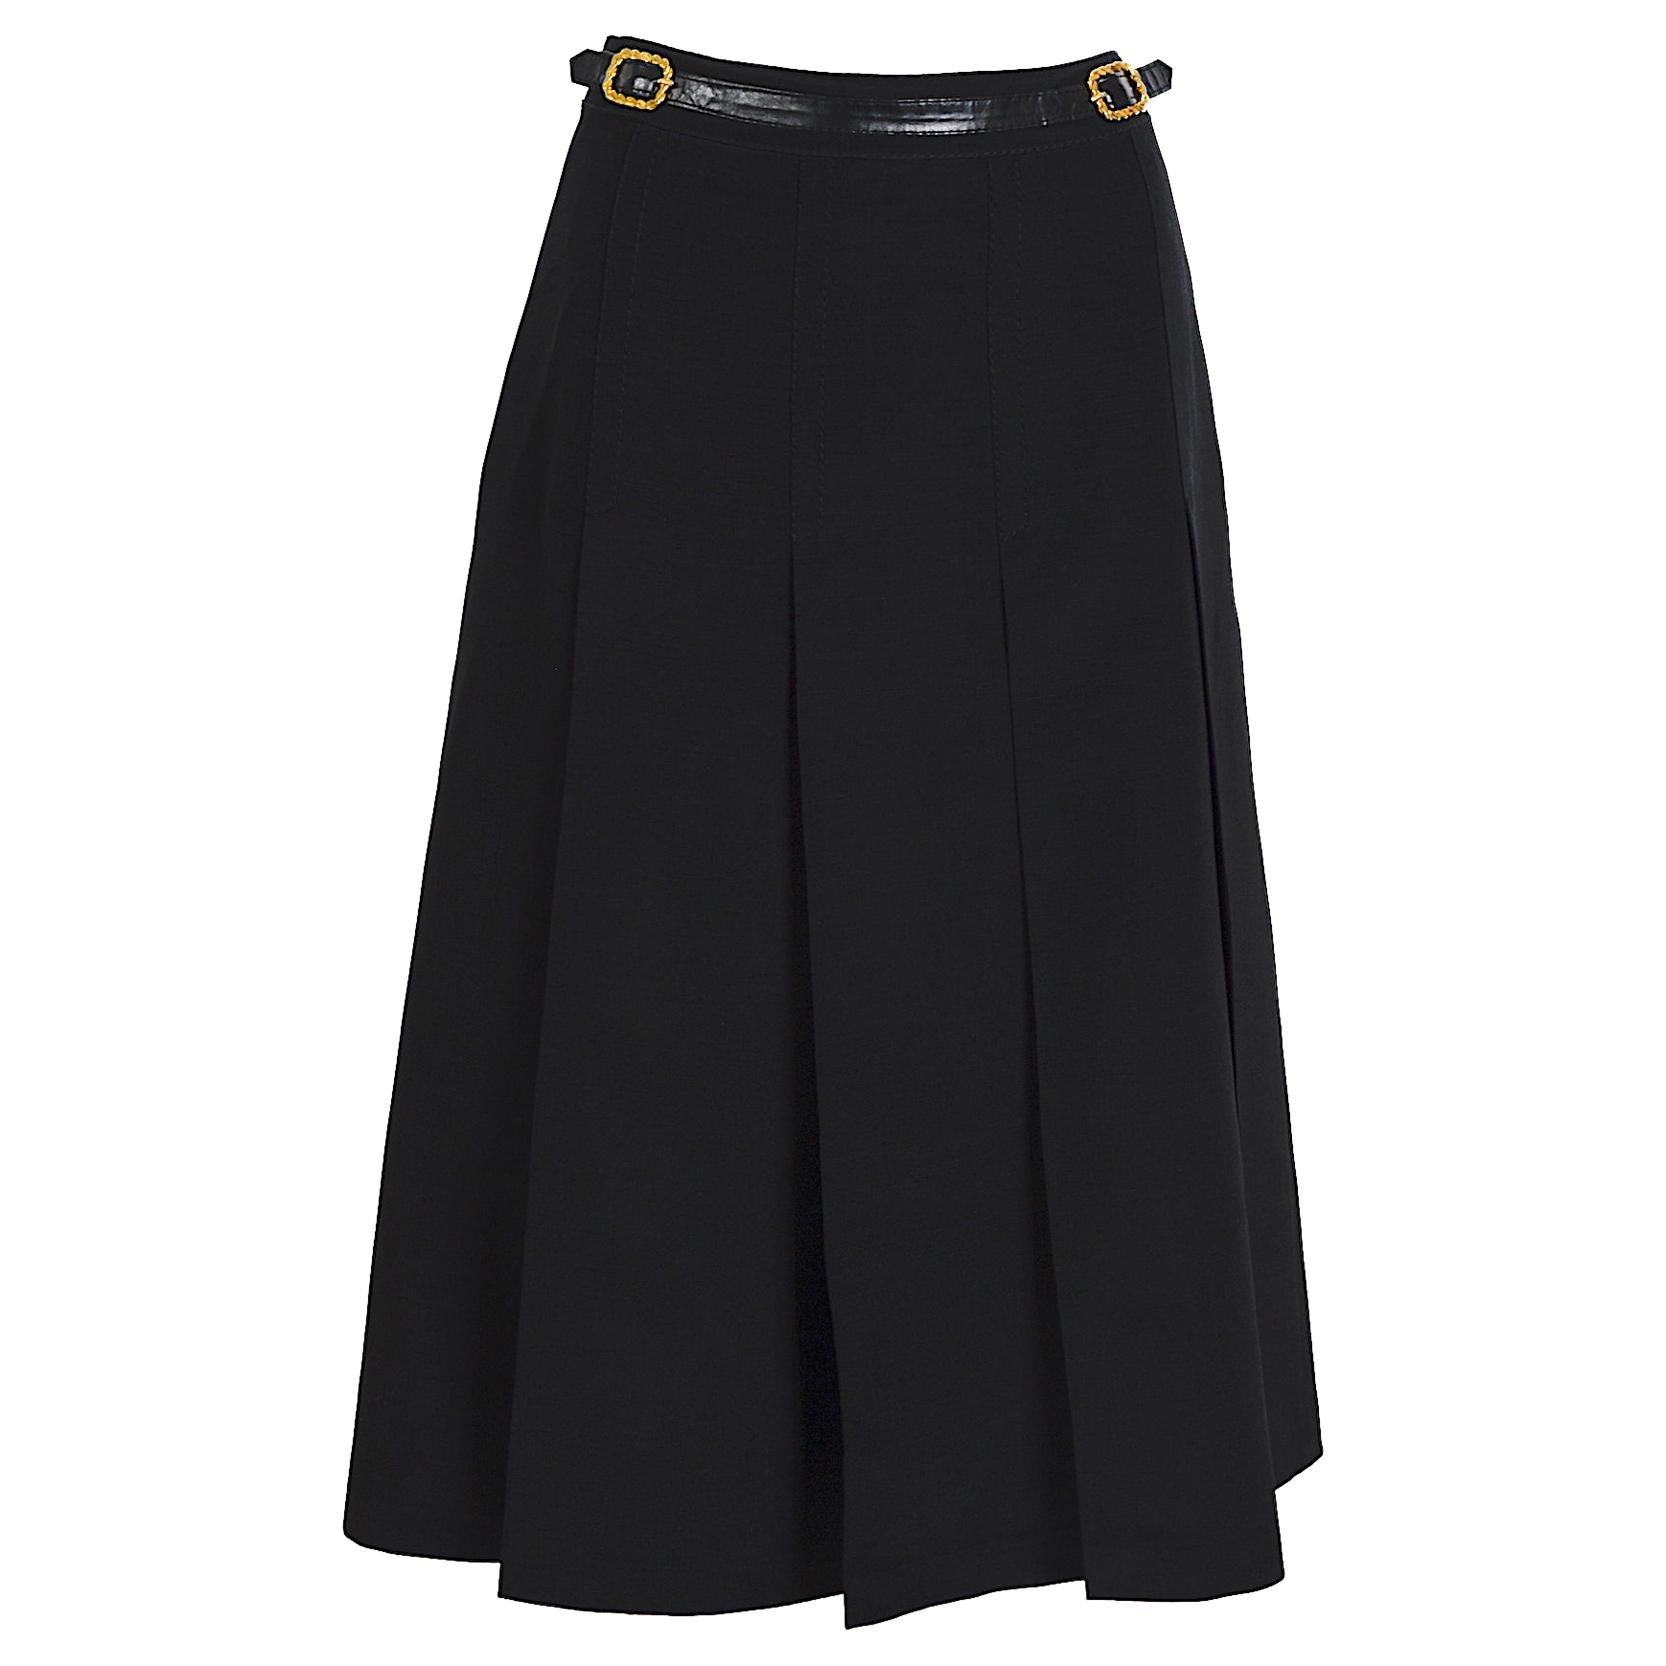 Céline Paris vintage 1980s black pleated skirt. 